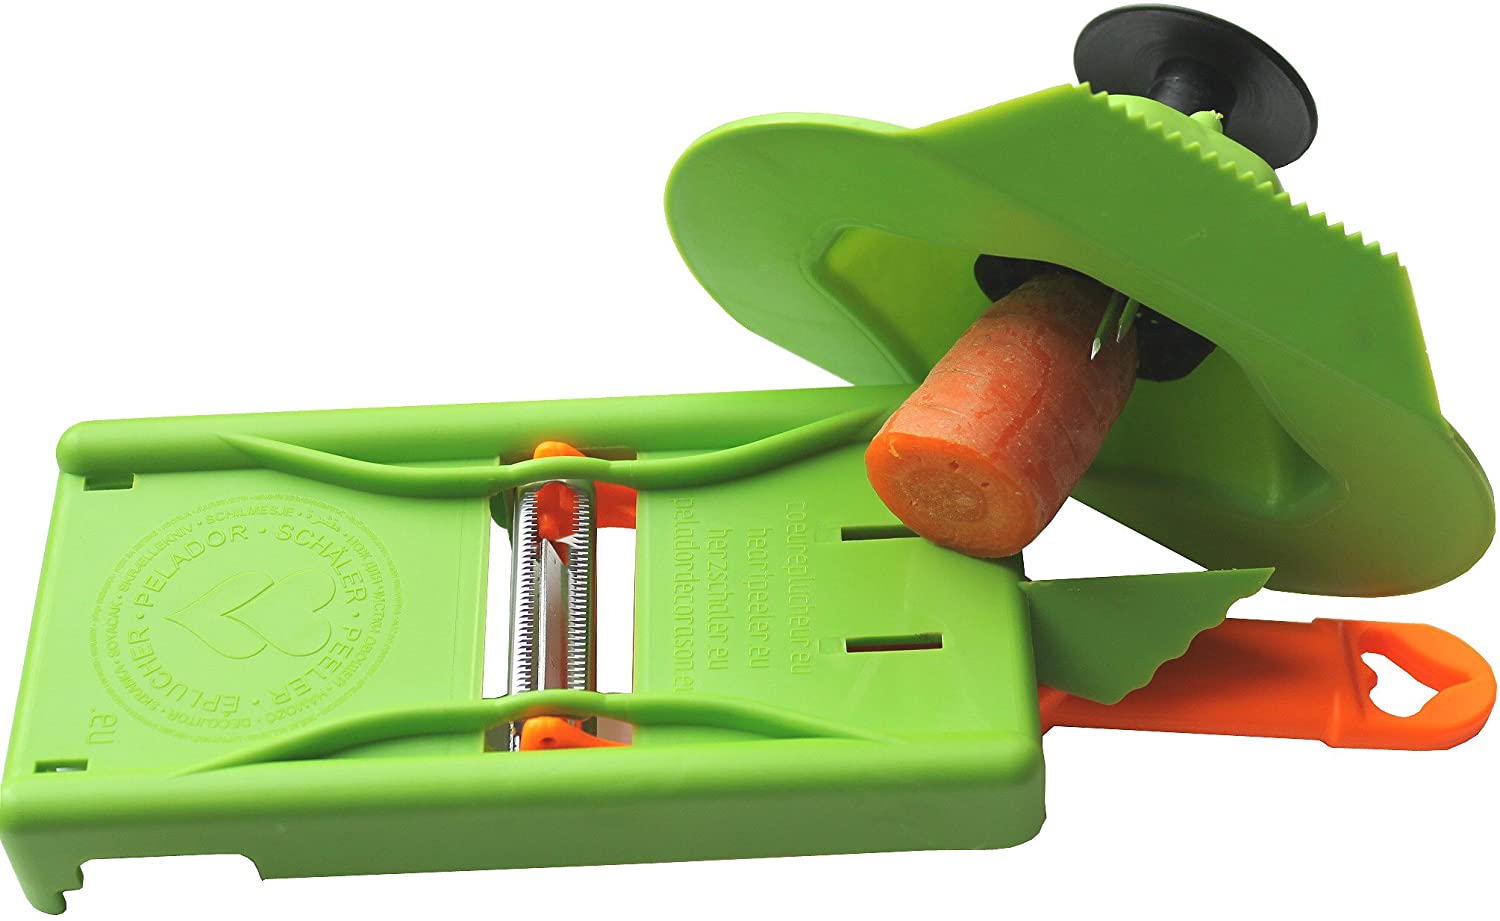 JOSKO Products Vegetable Slicer, Peeler and Julienne Strip Cutter with Finger Protection Orange/Green